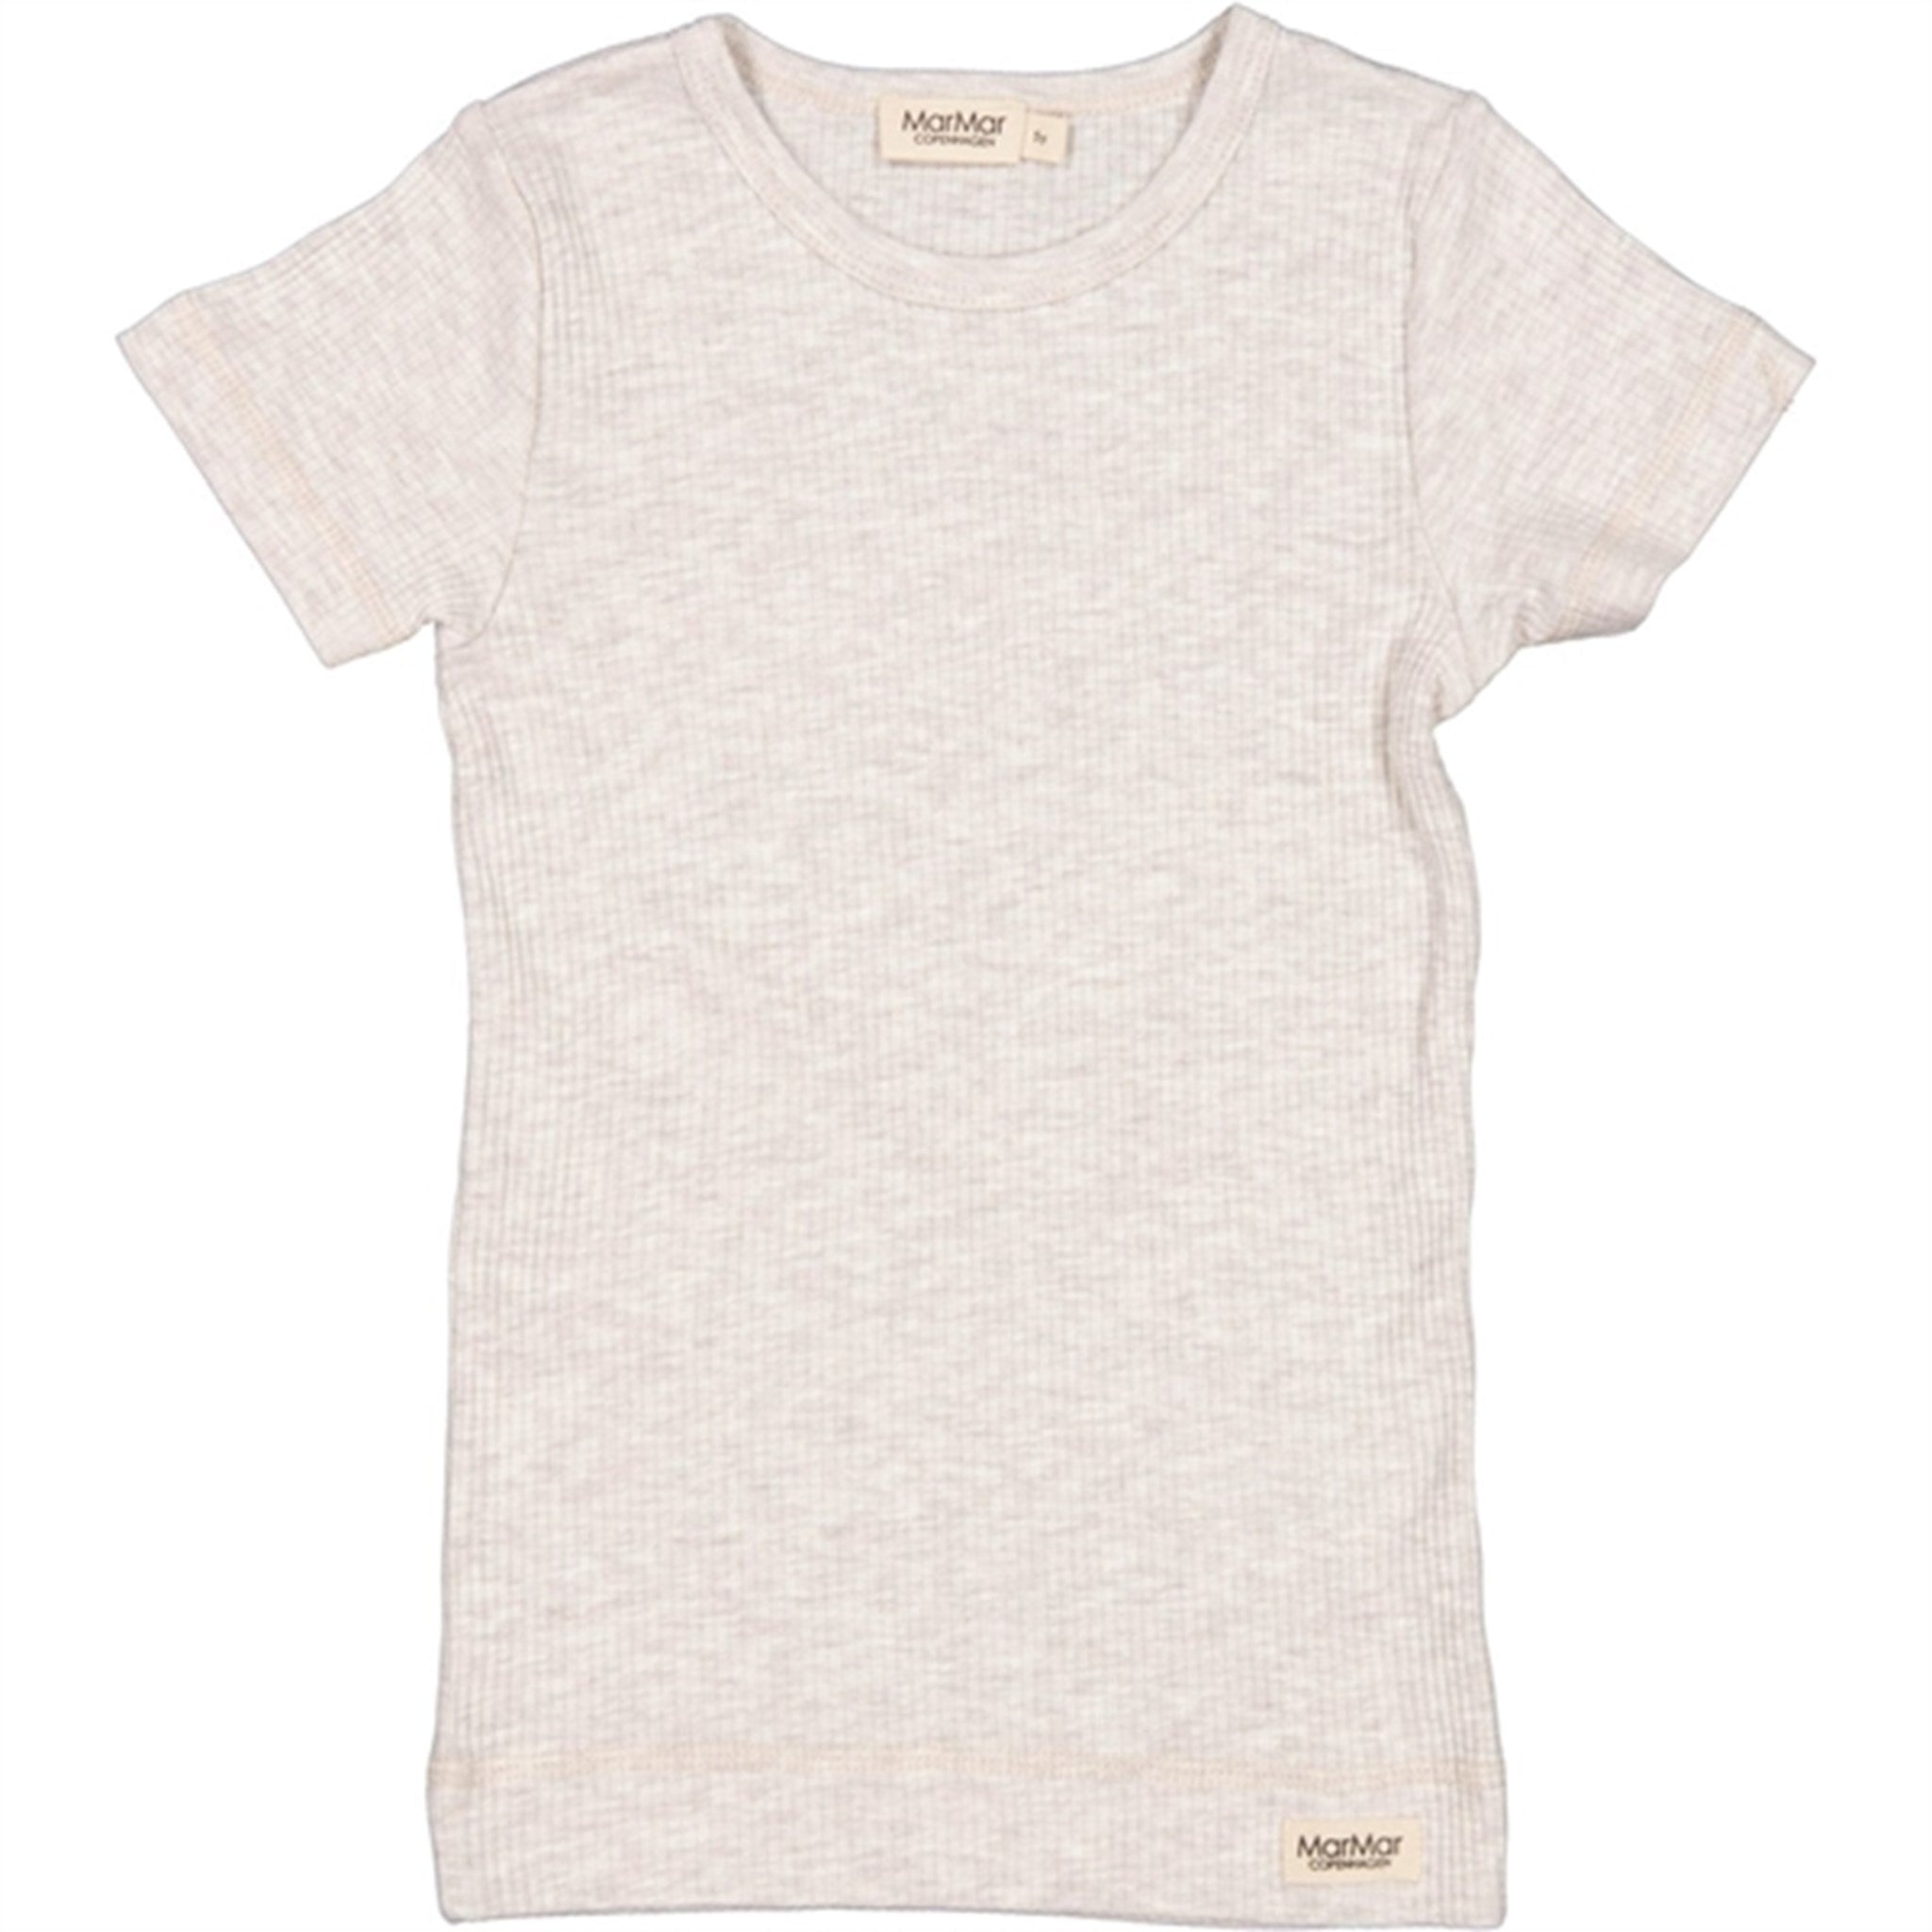 MarMar Modal Beige Melange Plain T-shirt